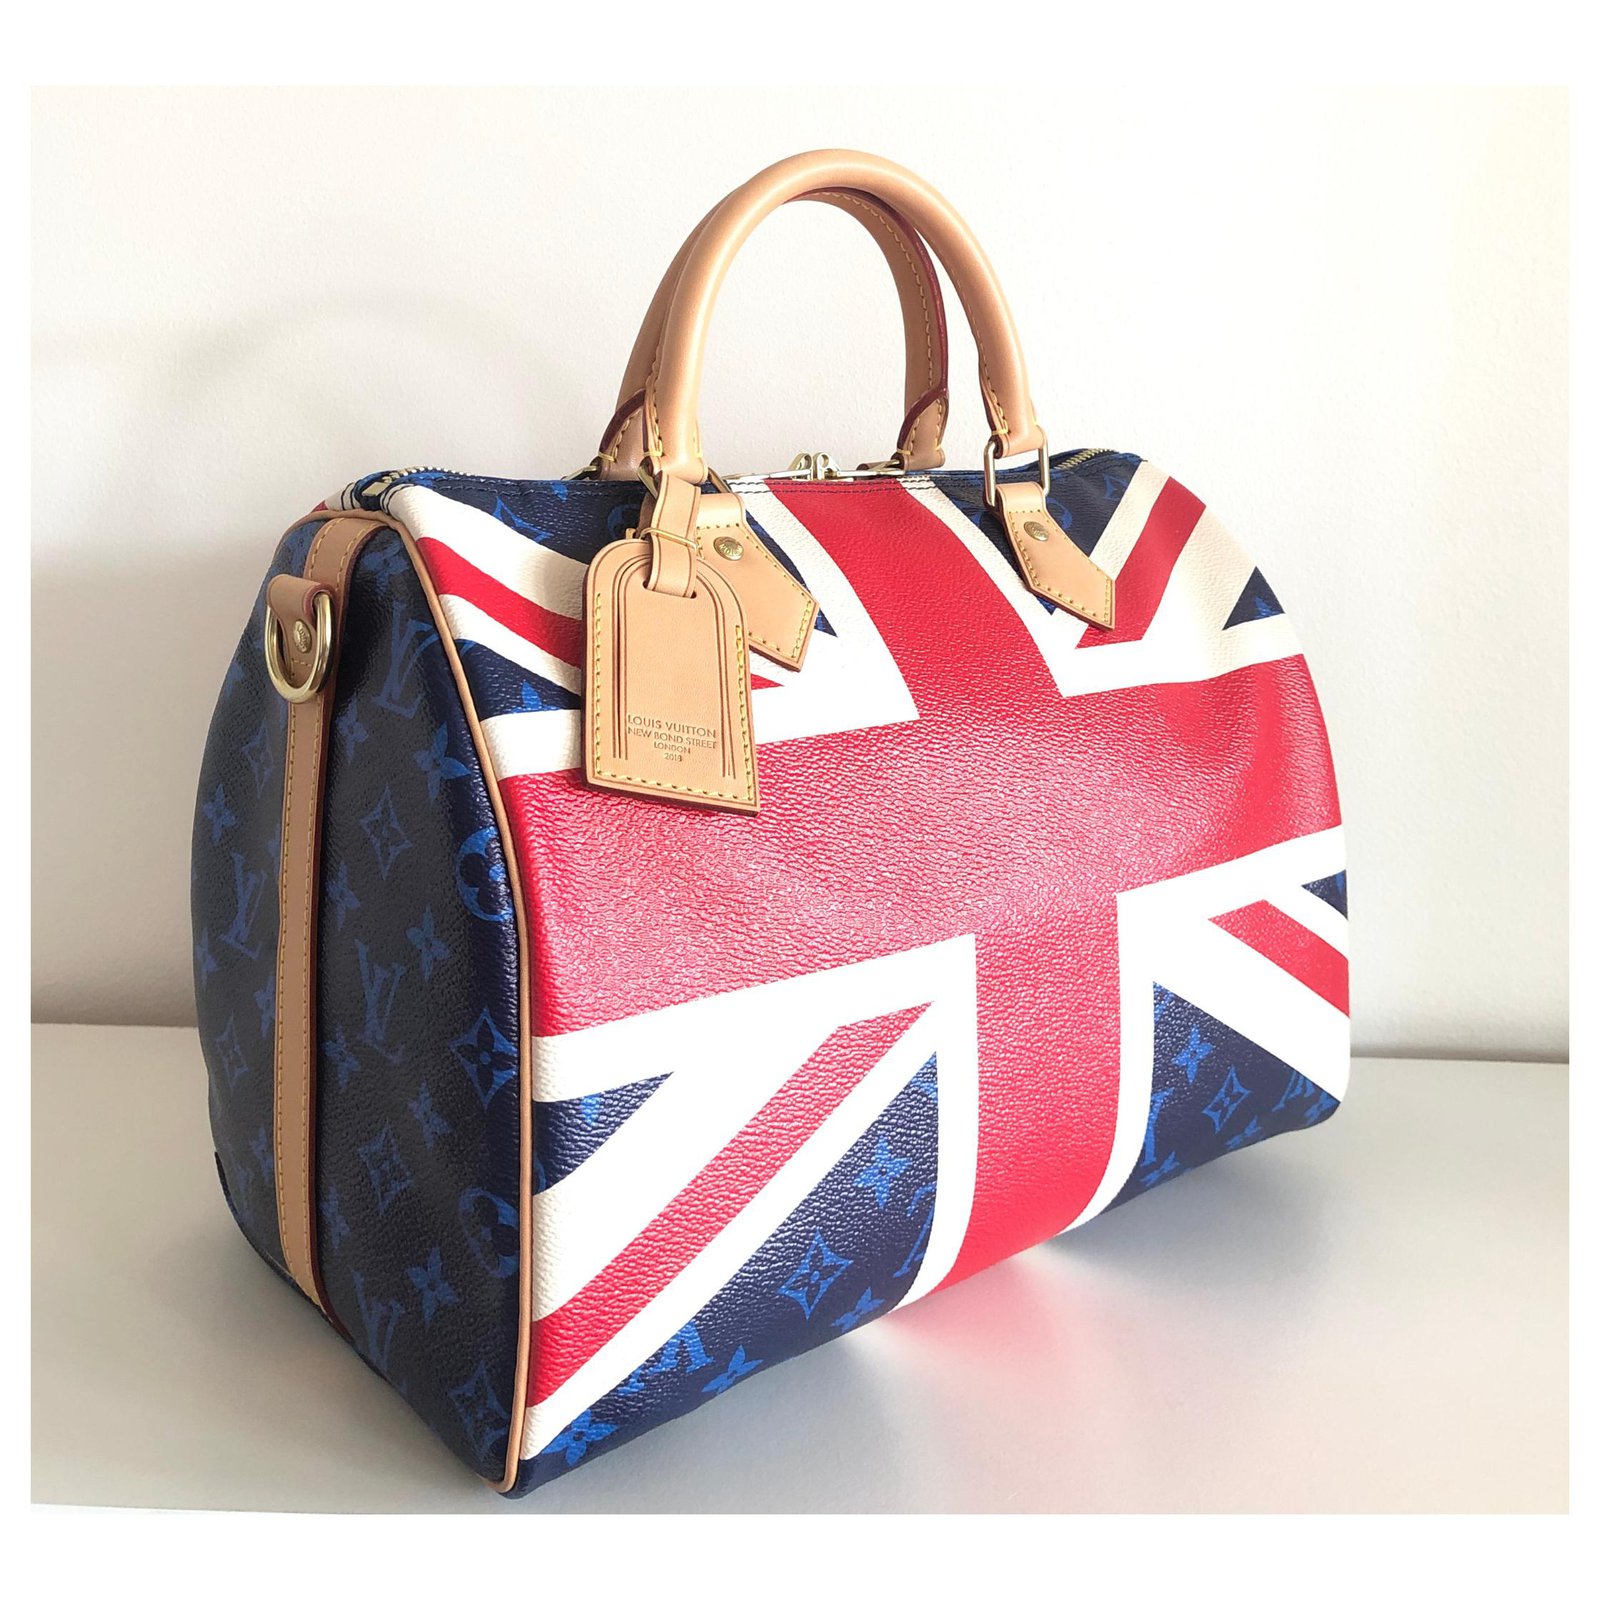 Louis Vuitton celebrates royal wedding with a patriotic bag collection